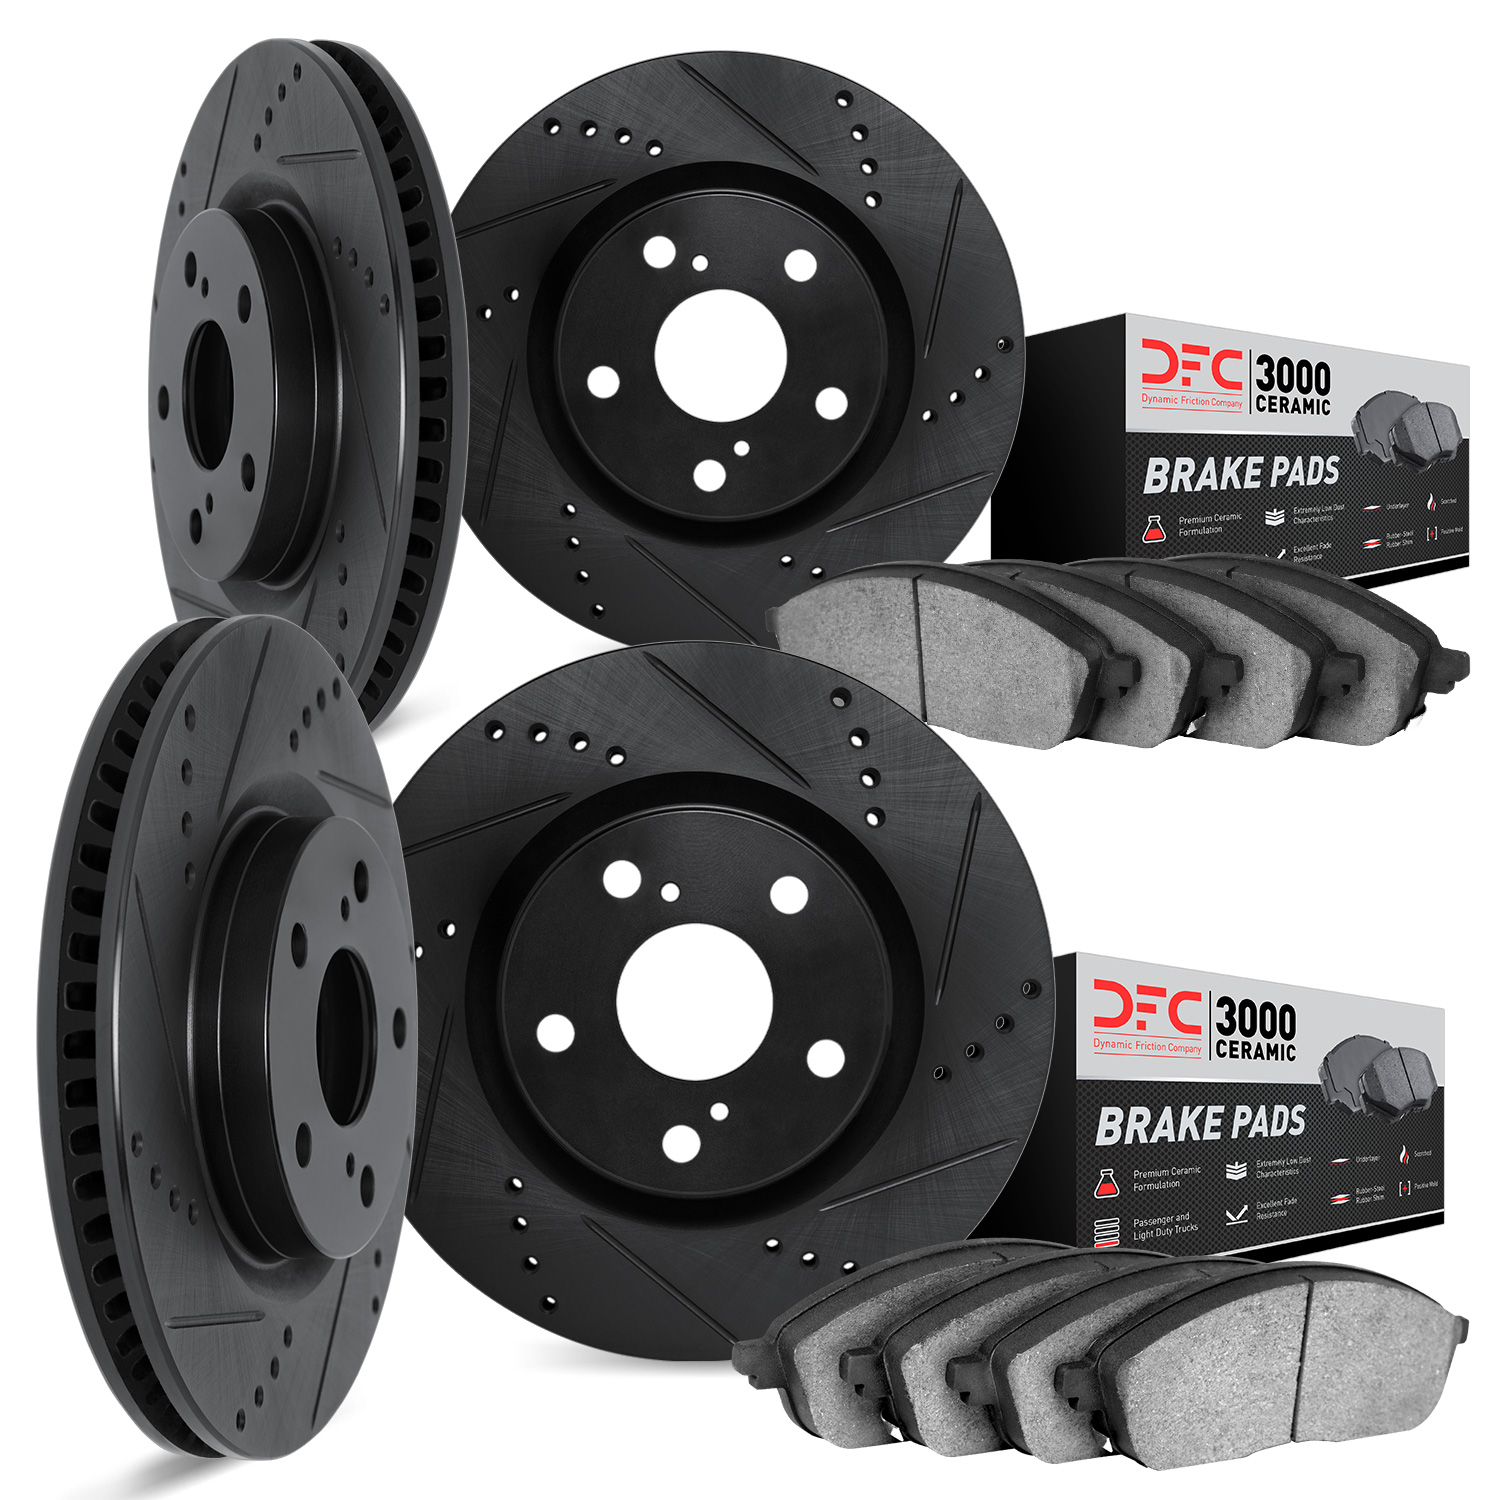 8304-80033 Drilled/Slotted Brake Rotors with 3000-Series Ceramic Brake Pads Kit [Black], 2007-2015 Ford/Lincoln/Mercury/Mazda, P